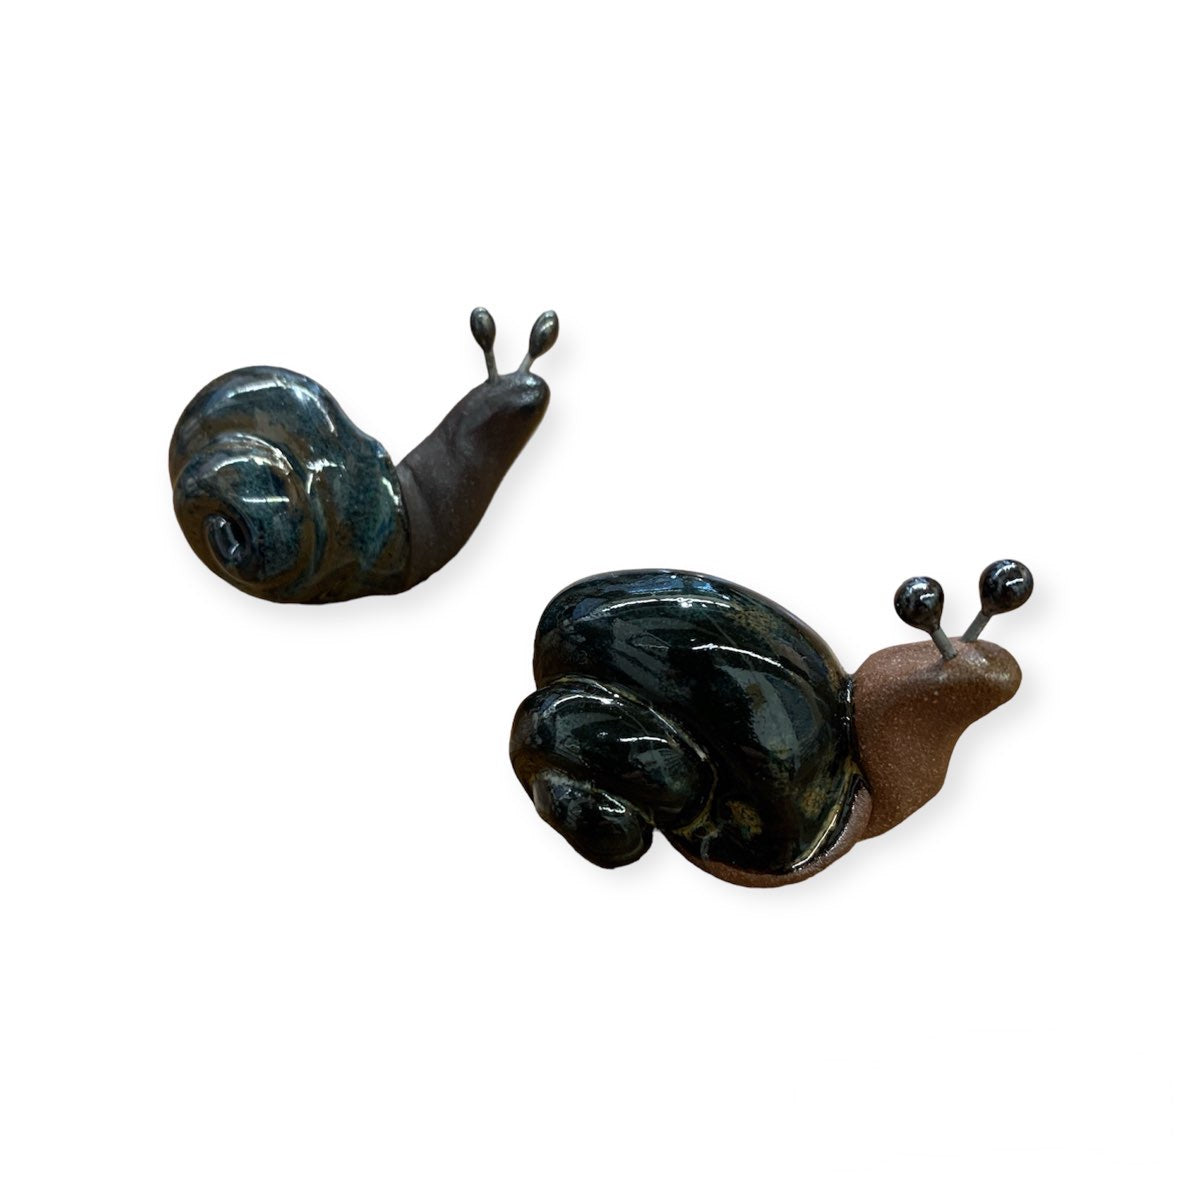 miniature ceramic snails